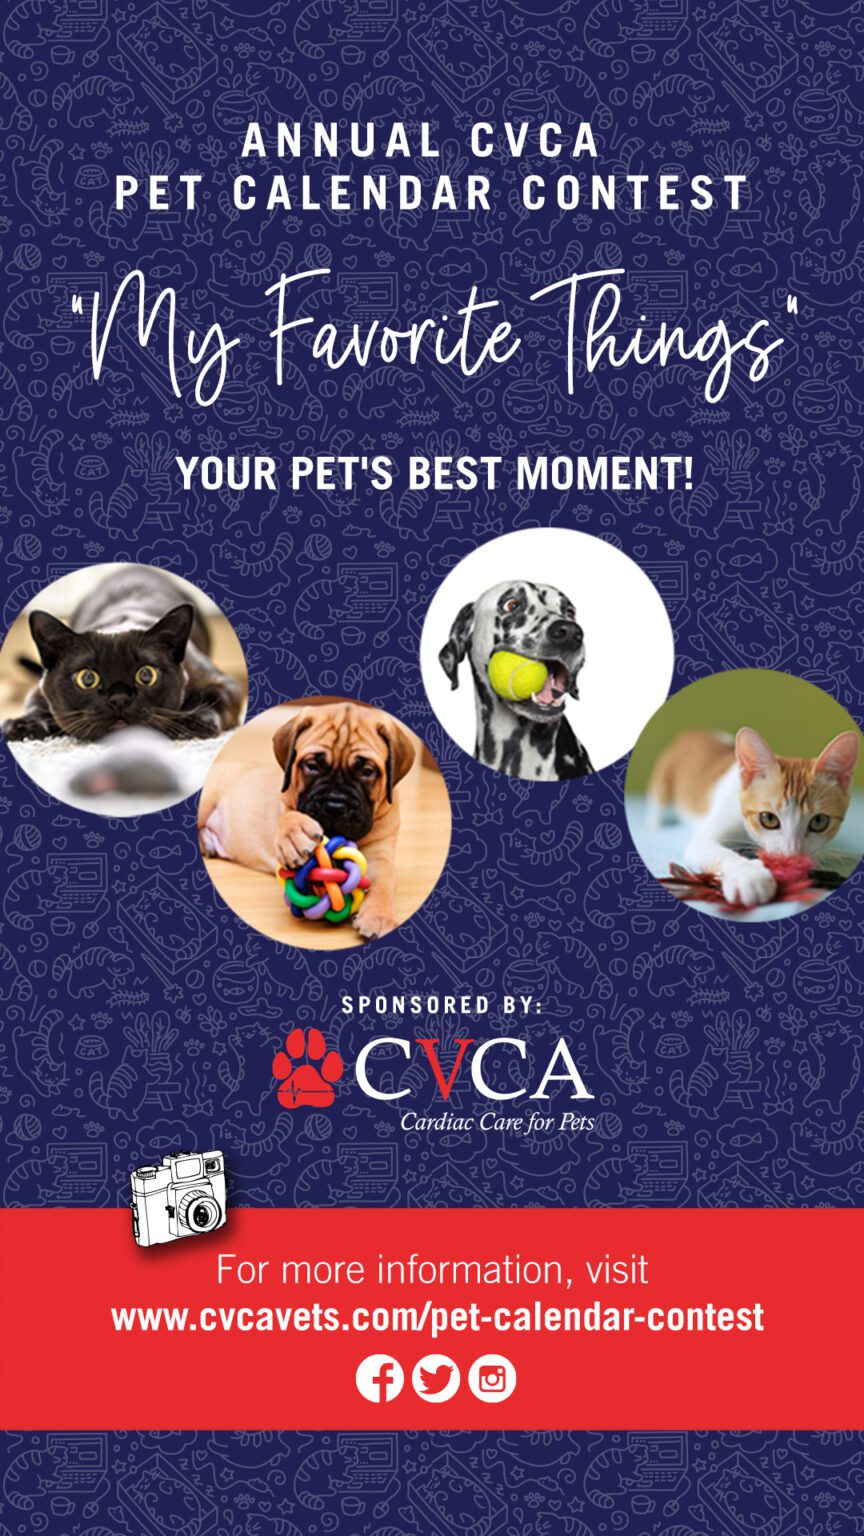 Annual CVCA Pet Calendar Contest Begins 10/11! CVCA Cardiac Care